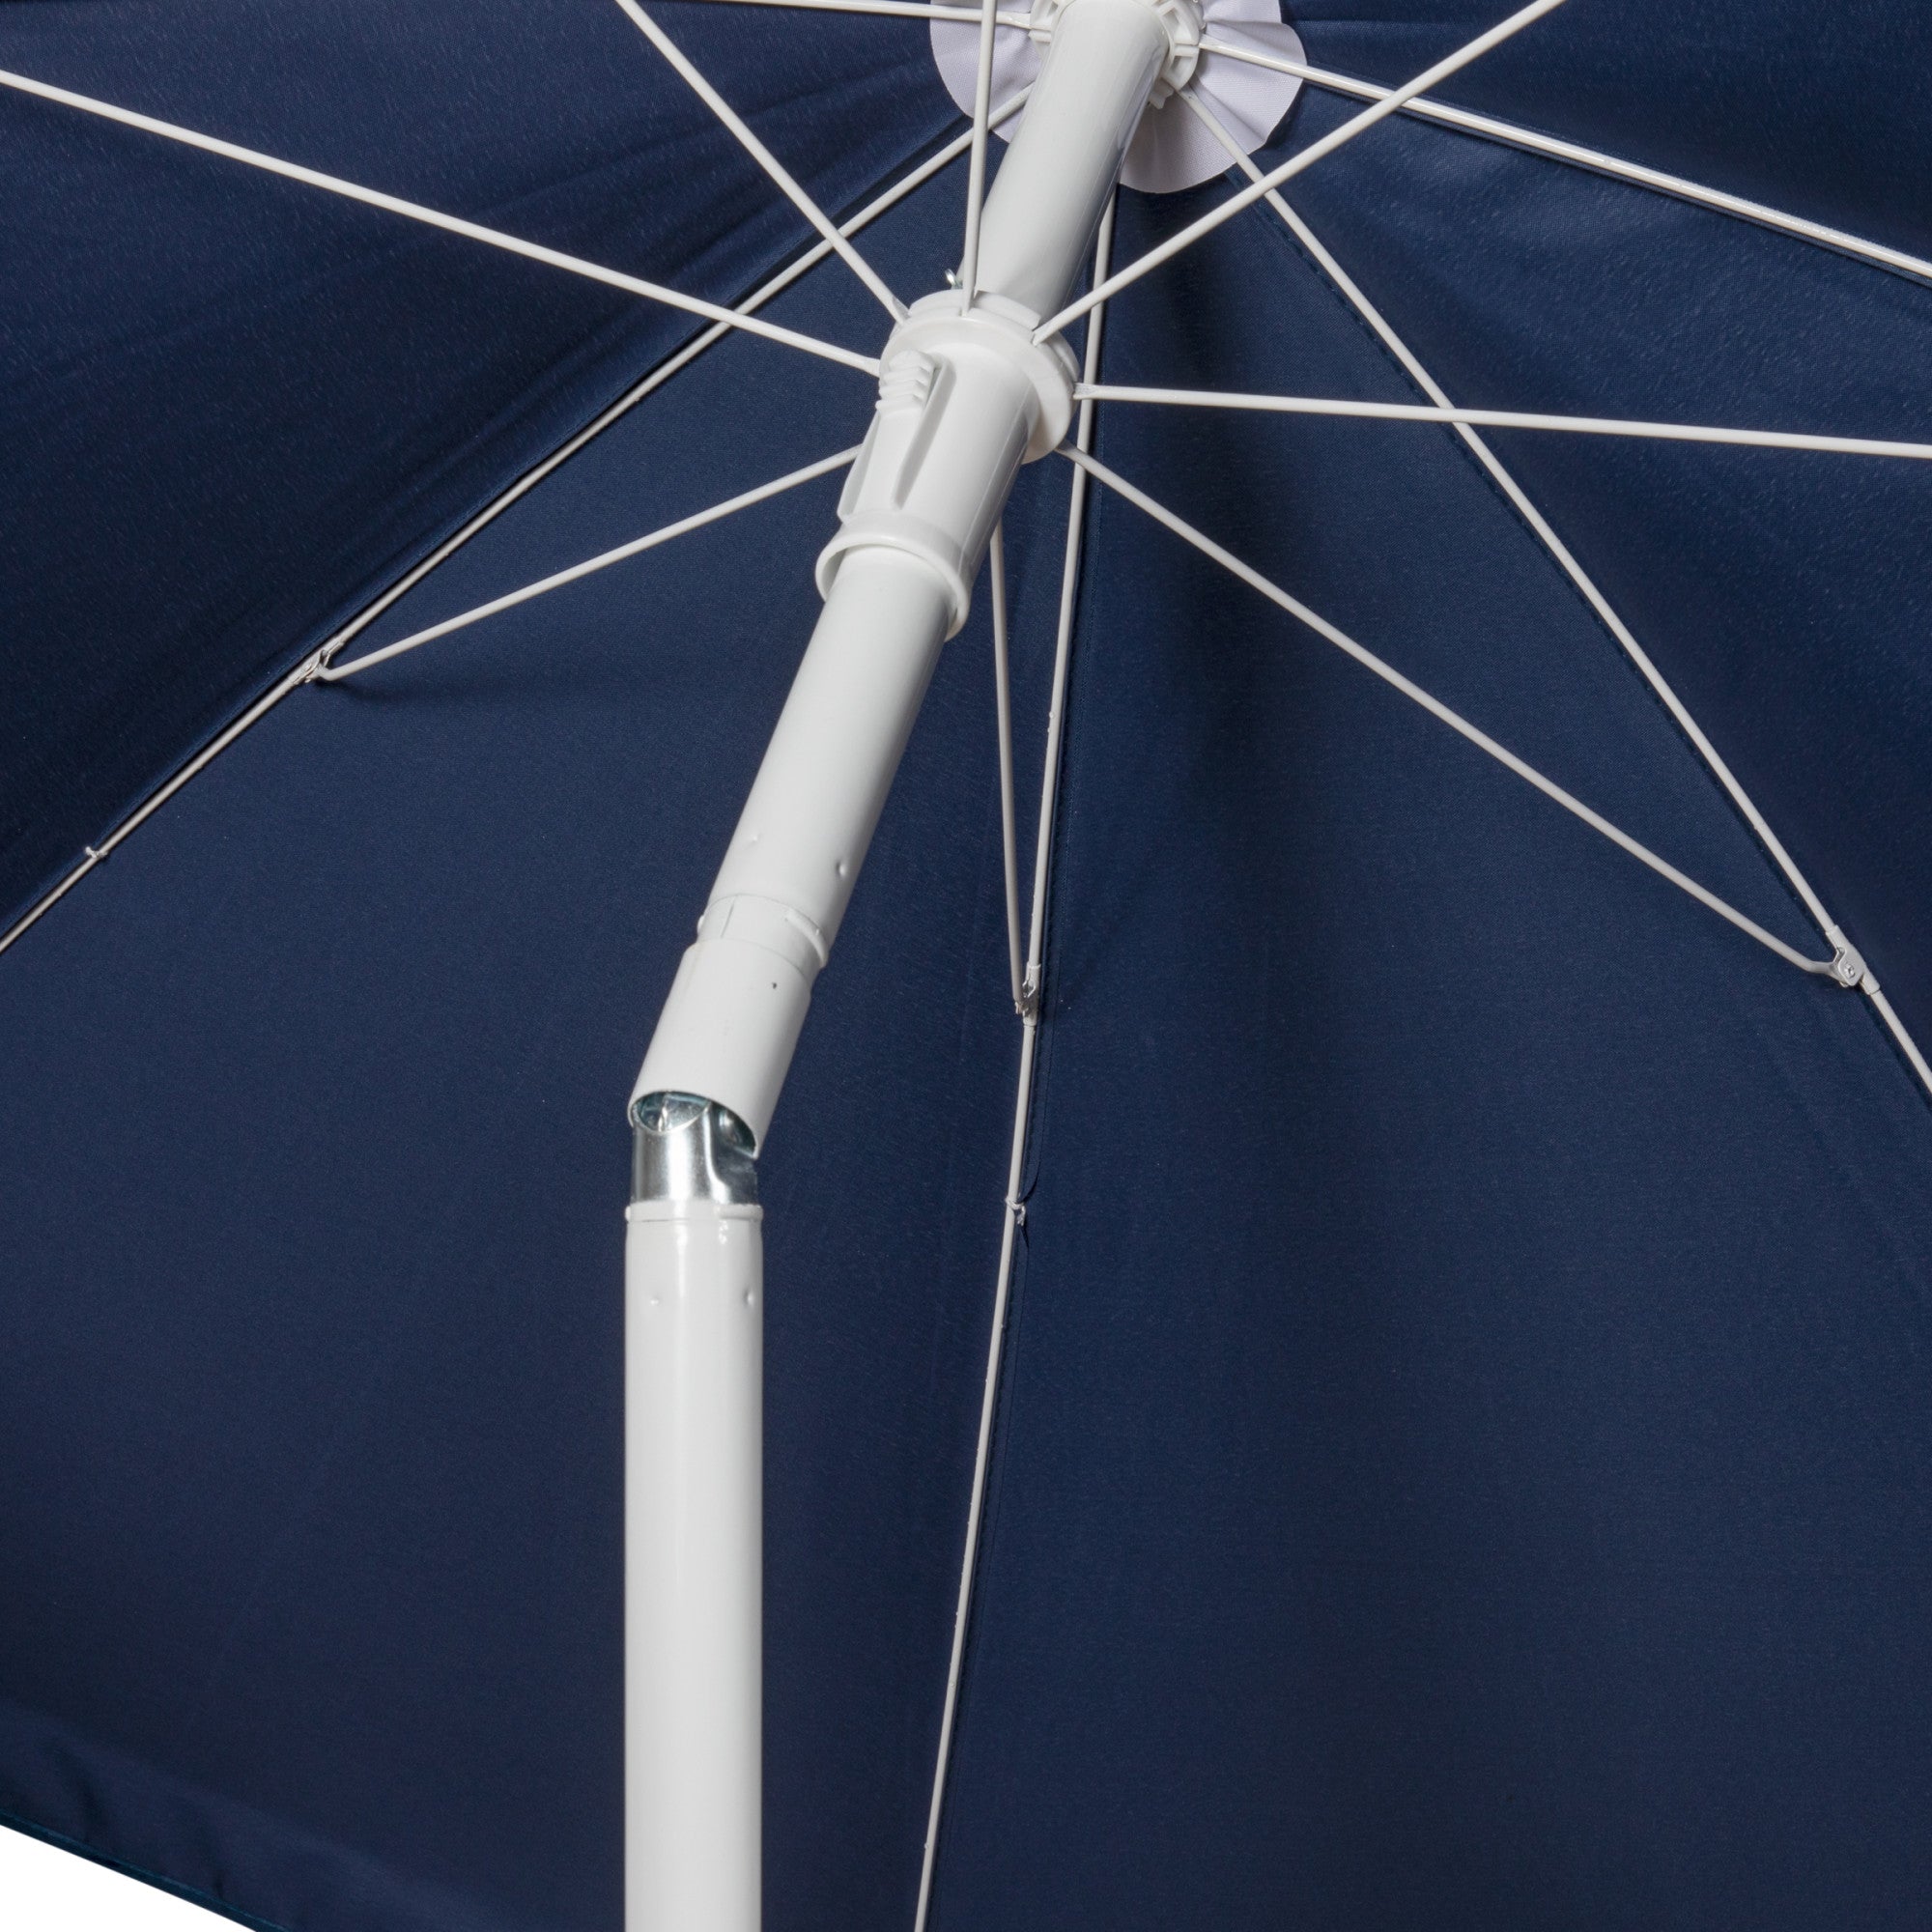 West Virginia Mountaineers - 5.5 Ft. Portable Beach Umbrella